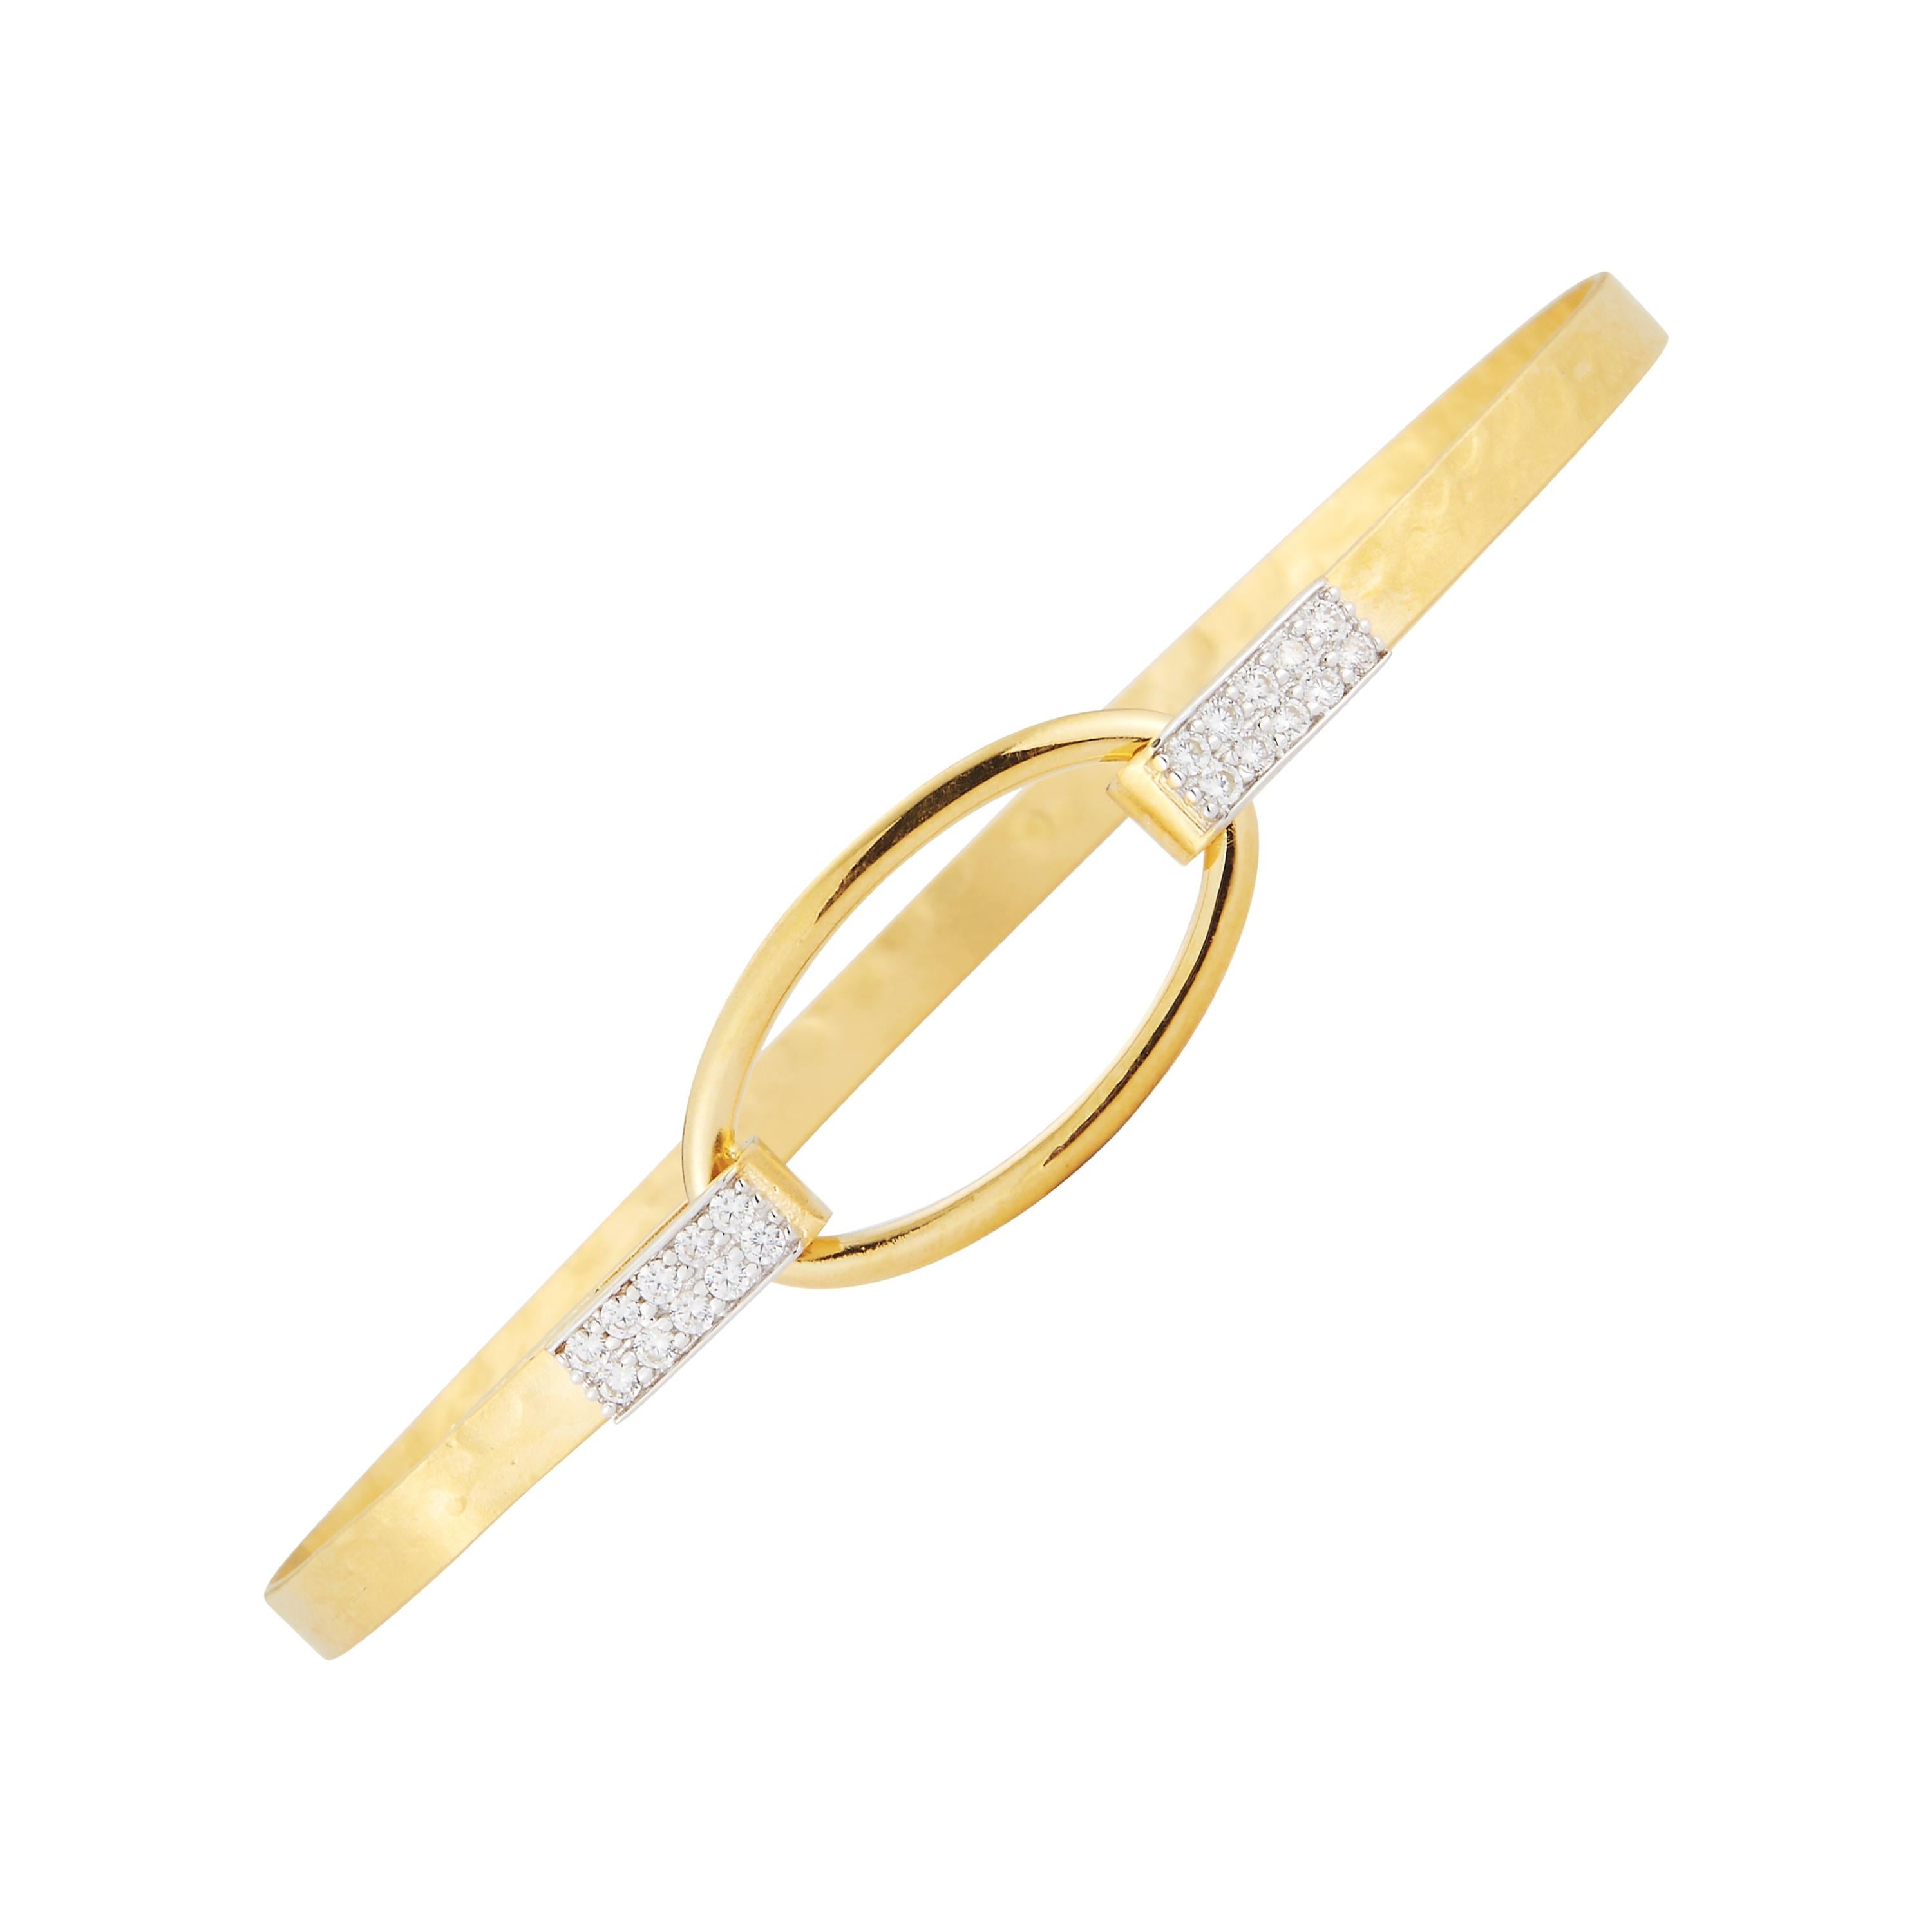 Handcrafted 14 Karat Yellow Gold Mixed Finish Open Oval Bangle Bracelet